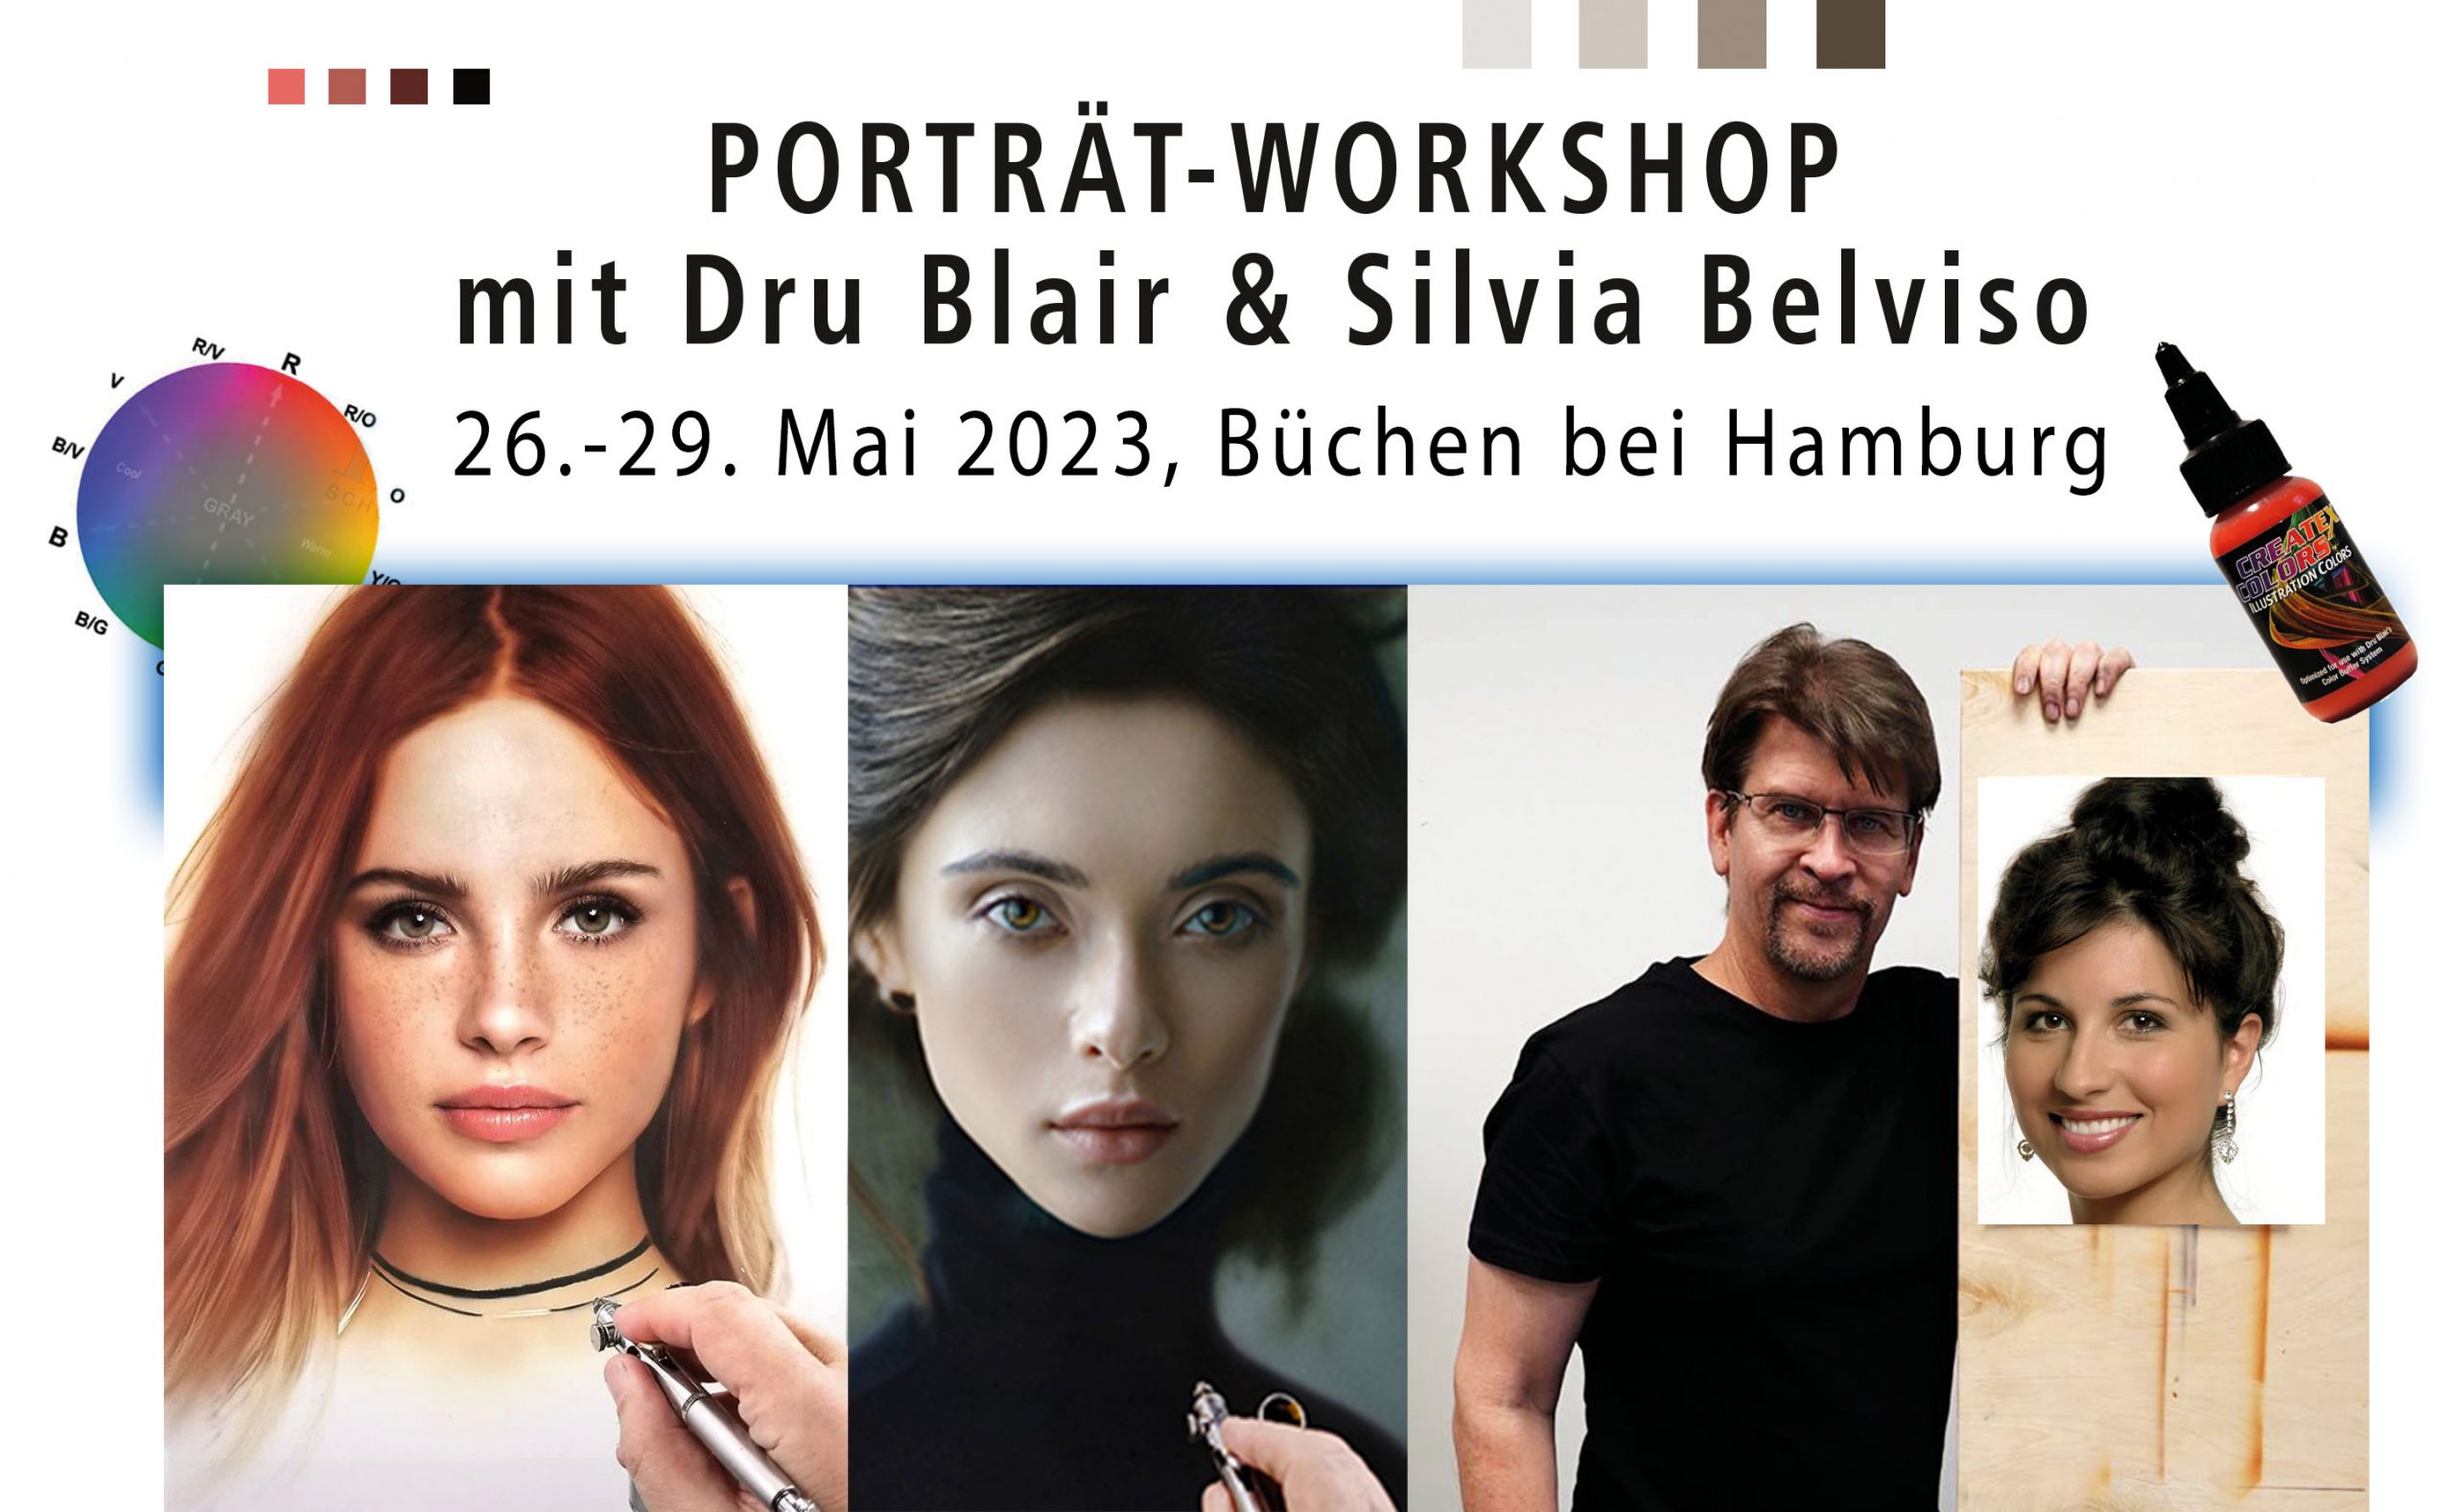 Finally back in Europe: Portrait workshop with Dru Blair